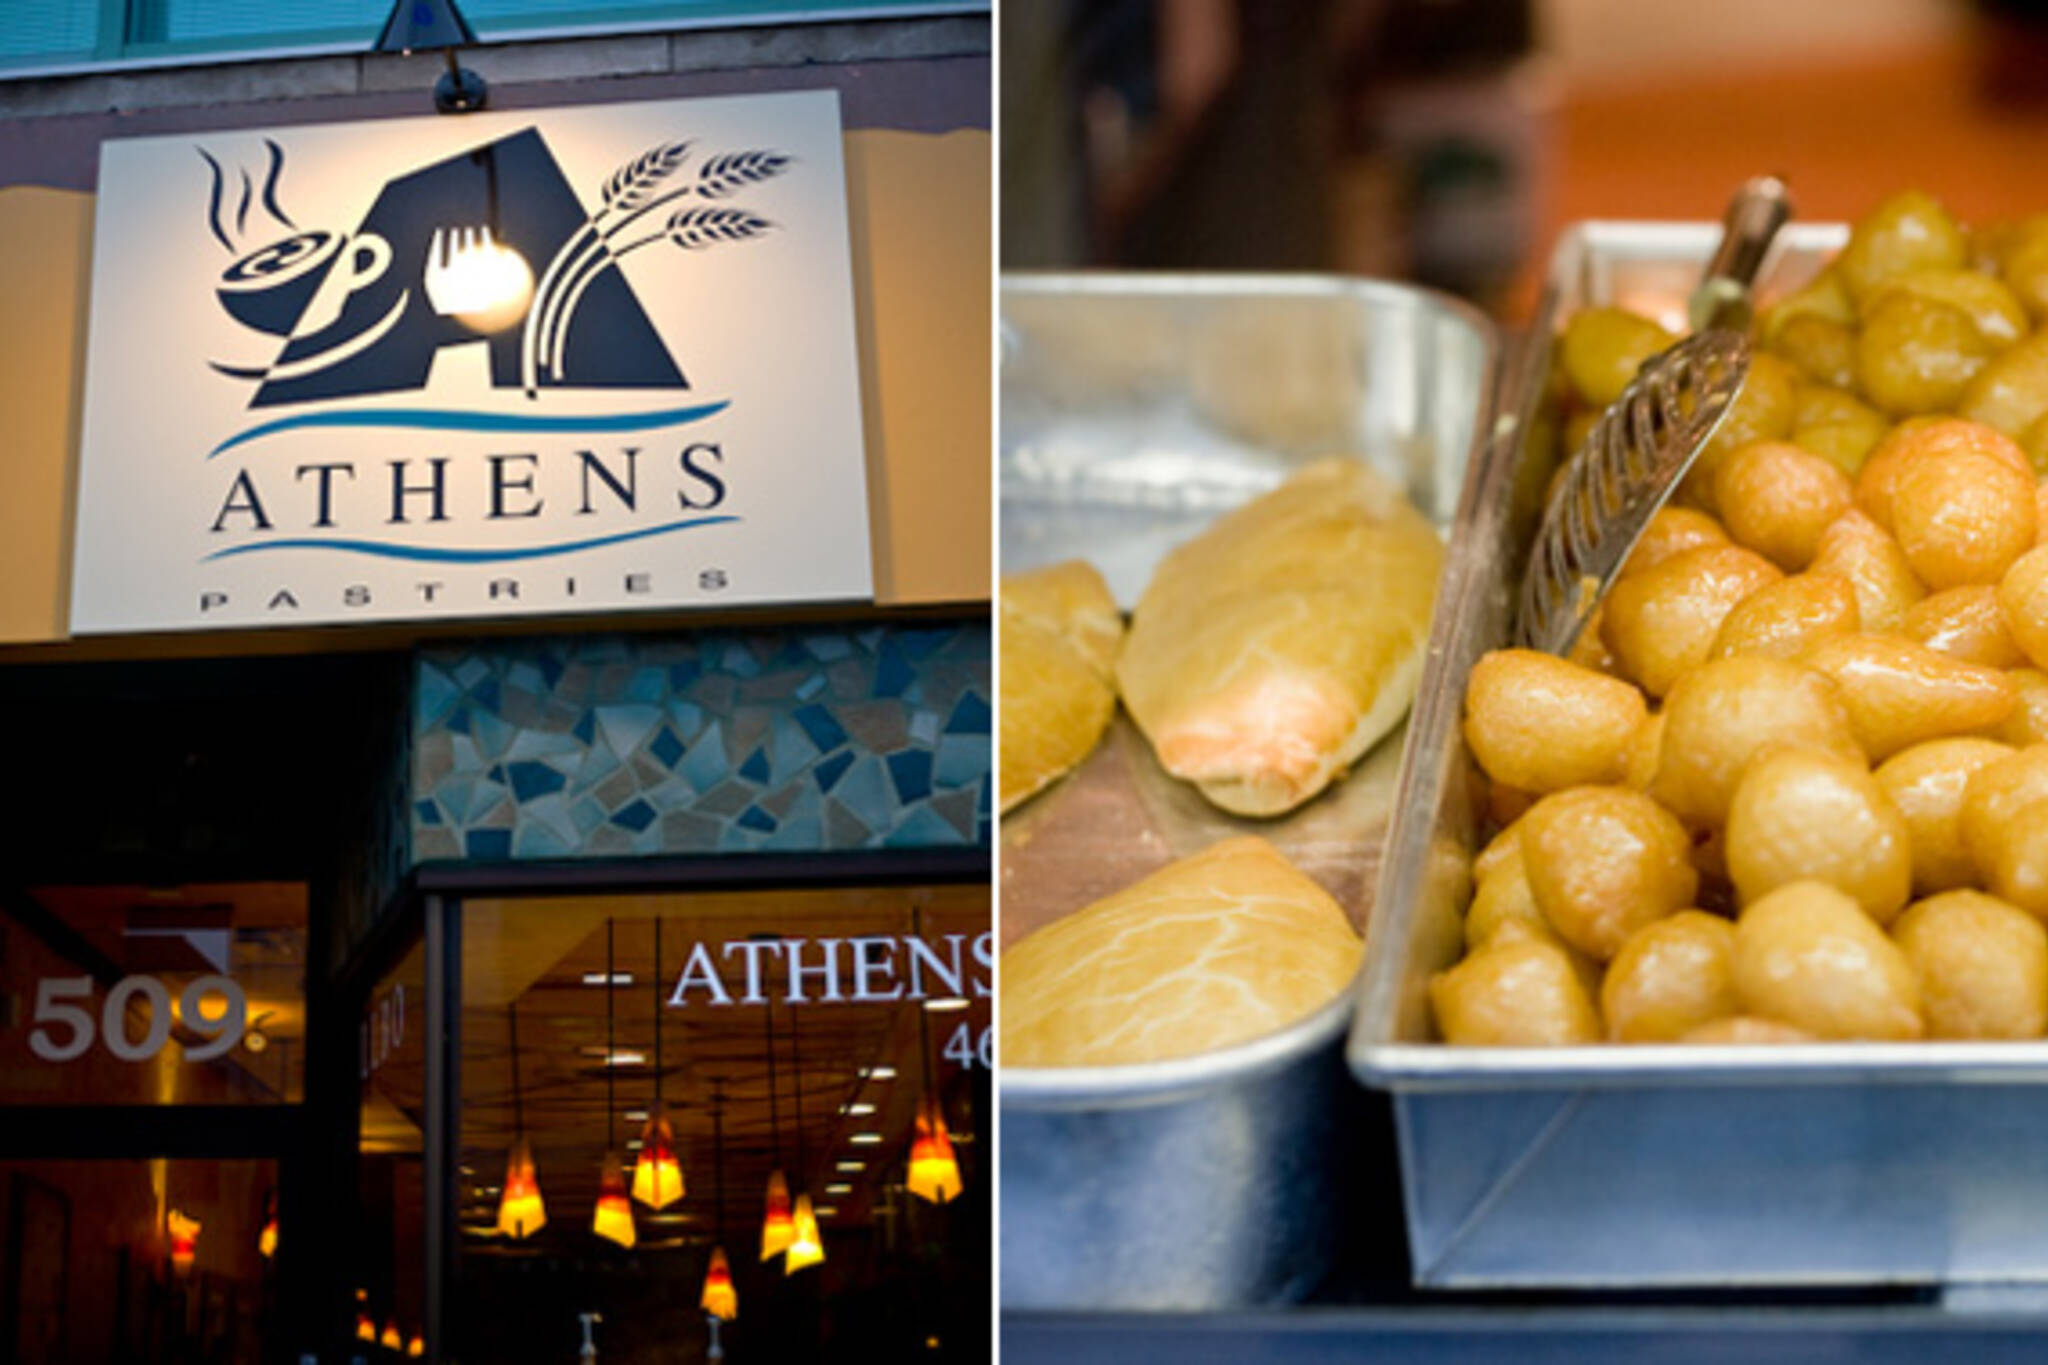 athens pastries toronto danforth greektown